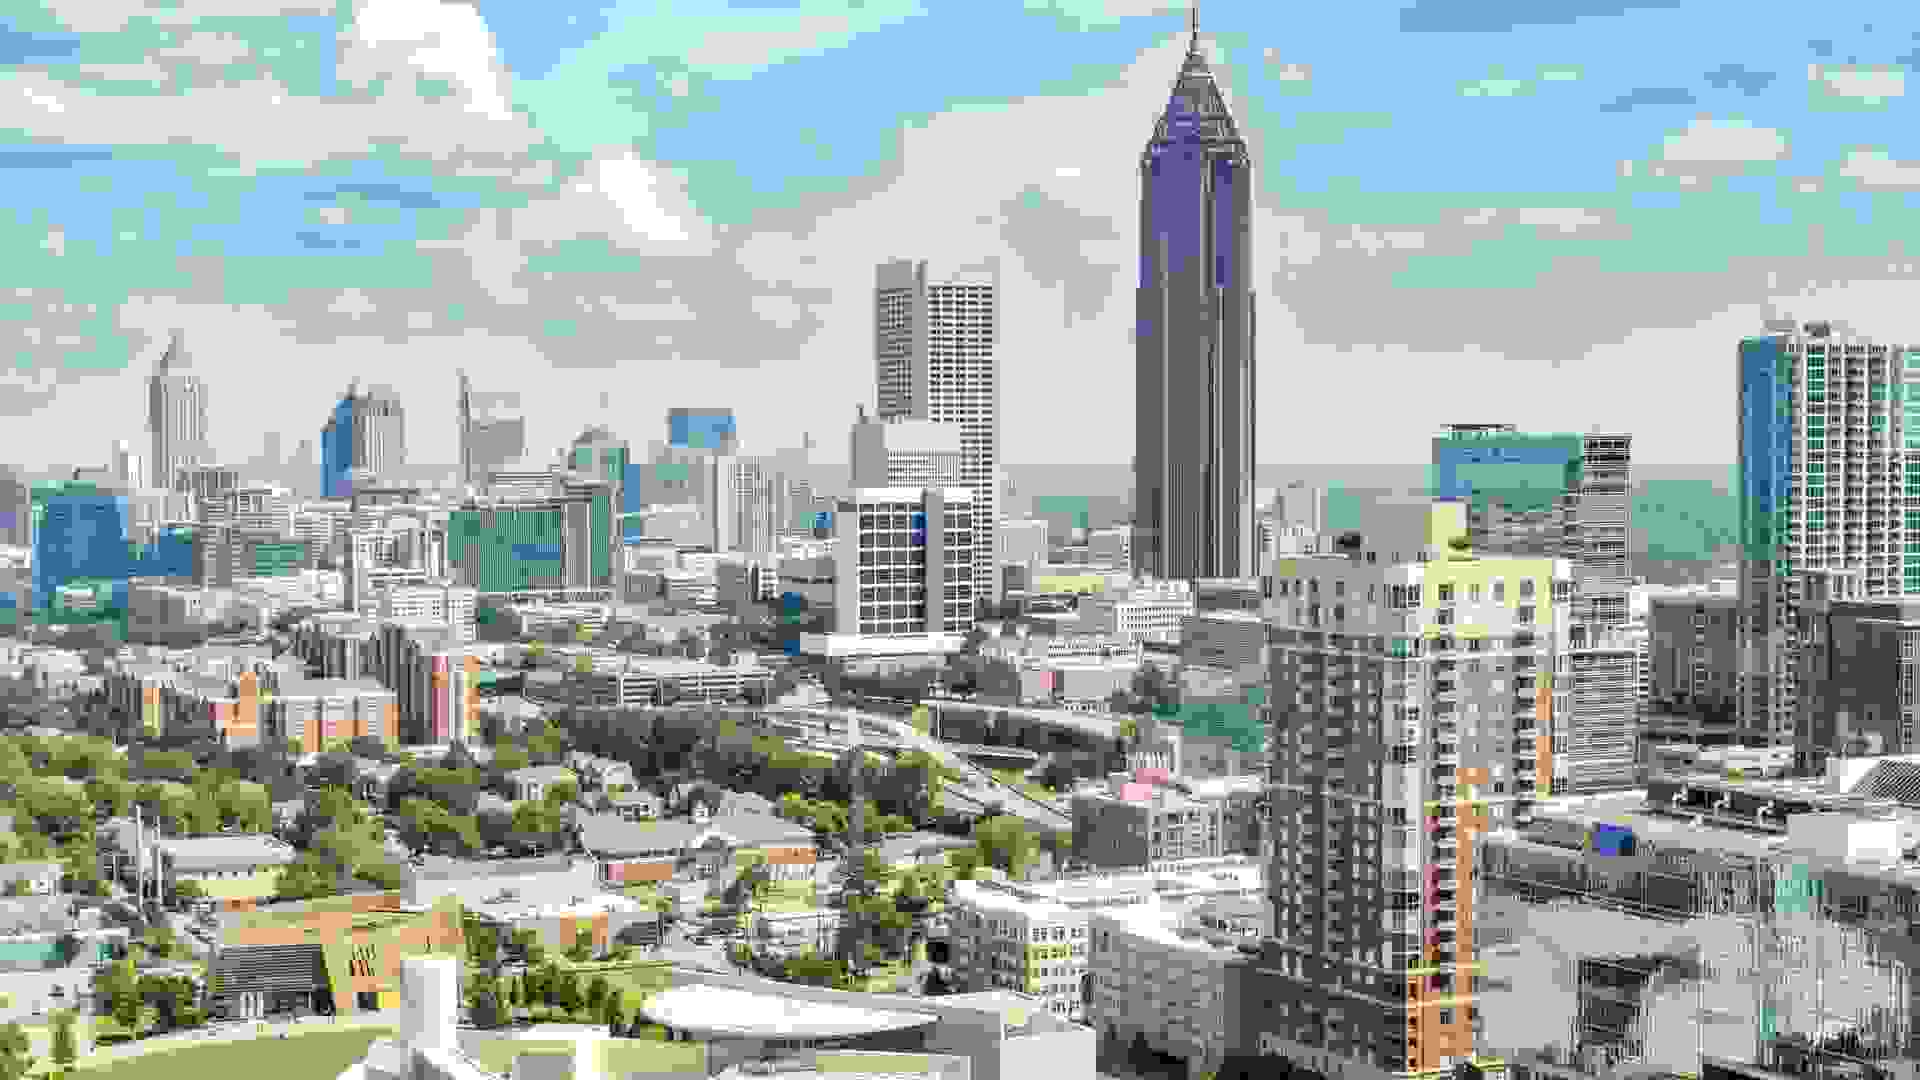 High-angle view of Atlanta's modern skyline, including office buildings, hotels, and condominiums - Atlanta, Georgia, USA.